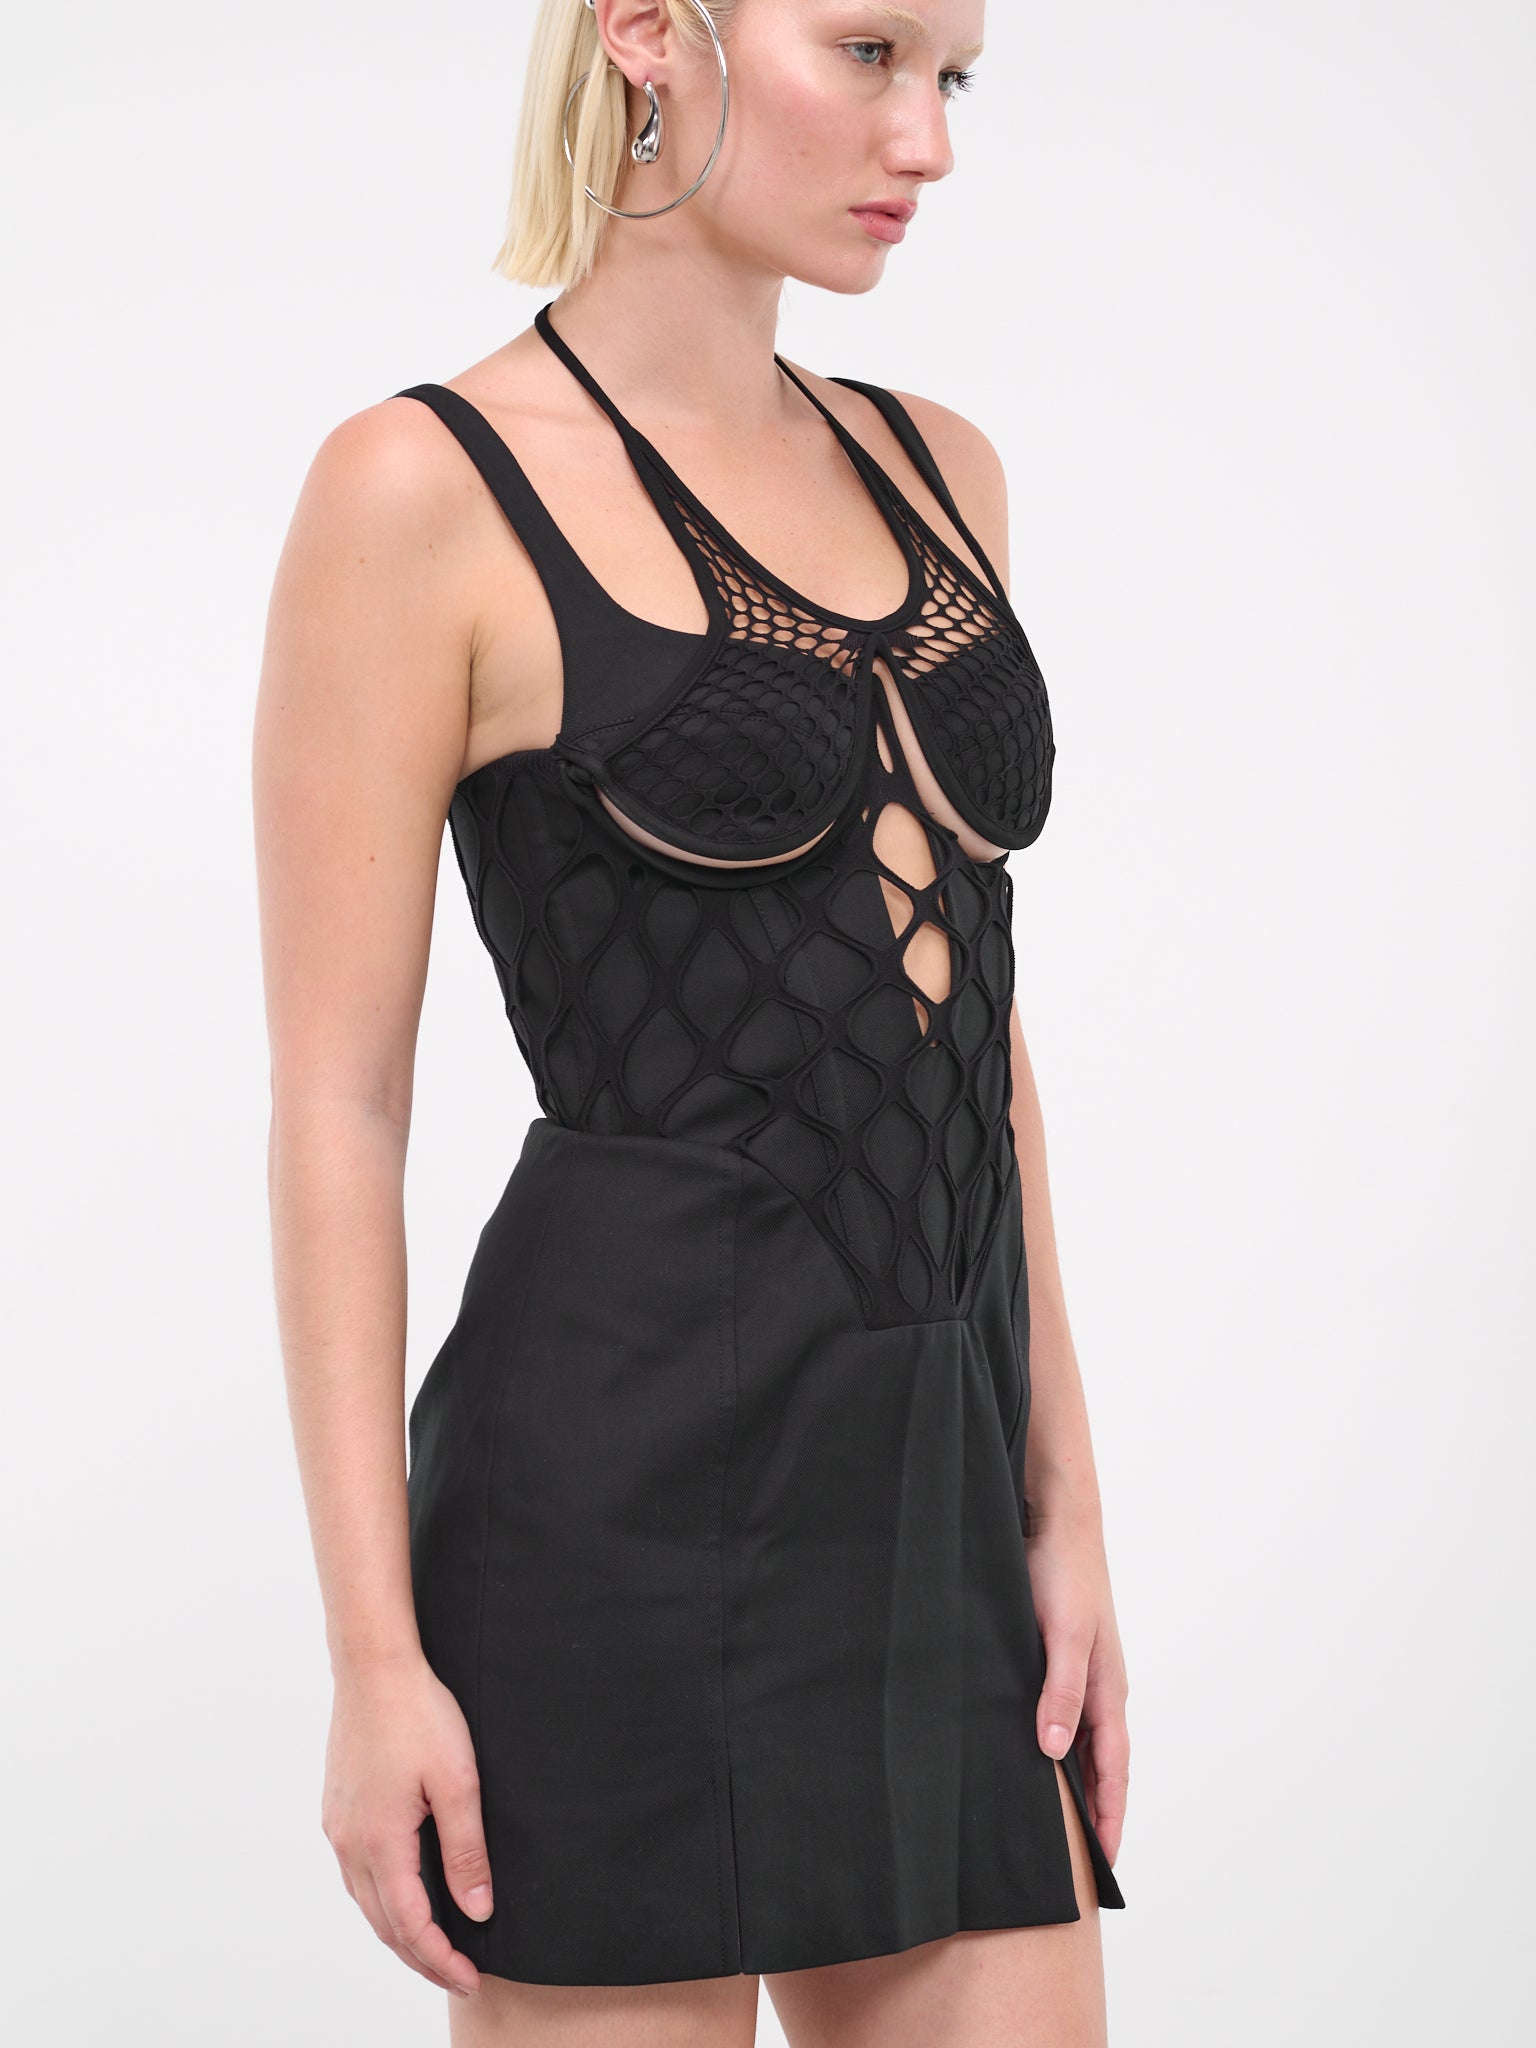 Fishnet Wire Corset Dress (A9989-1003-BLACK)